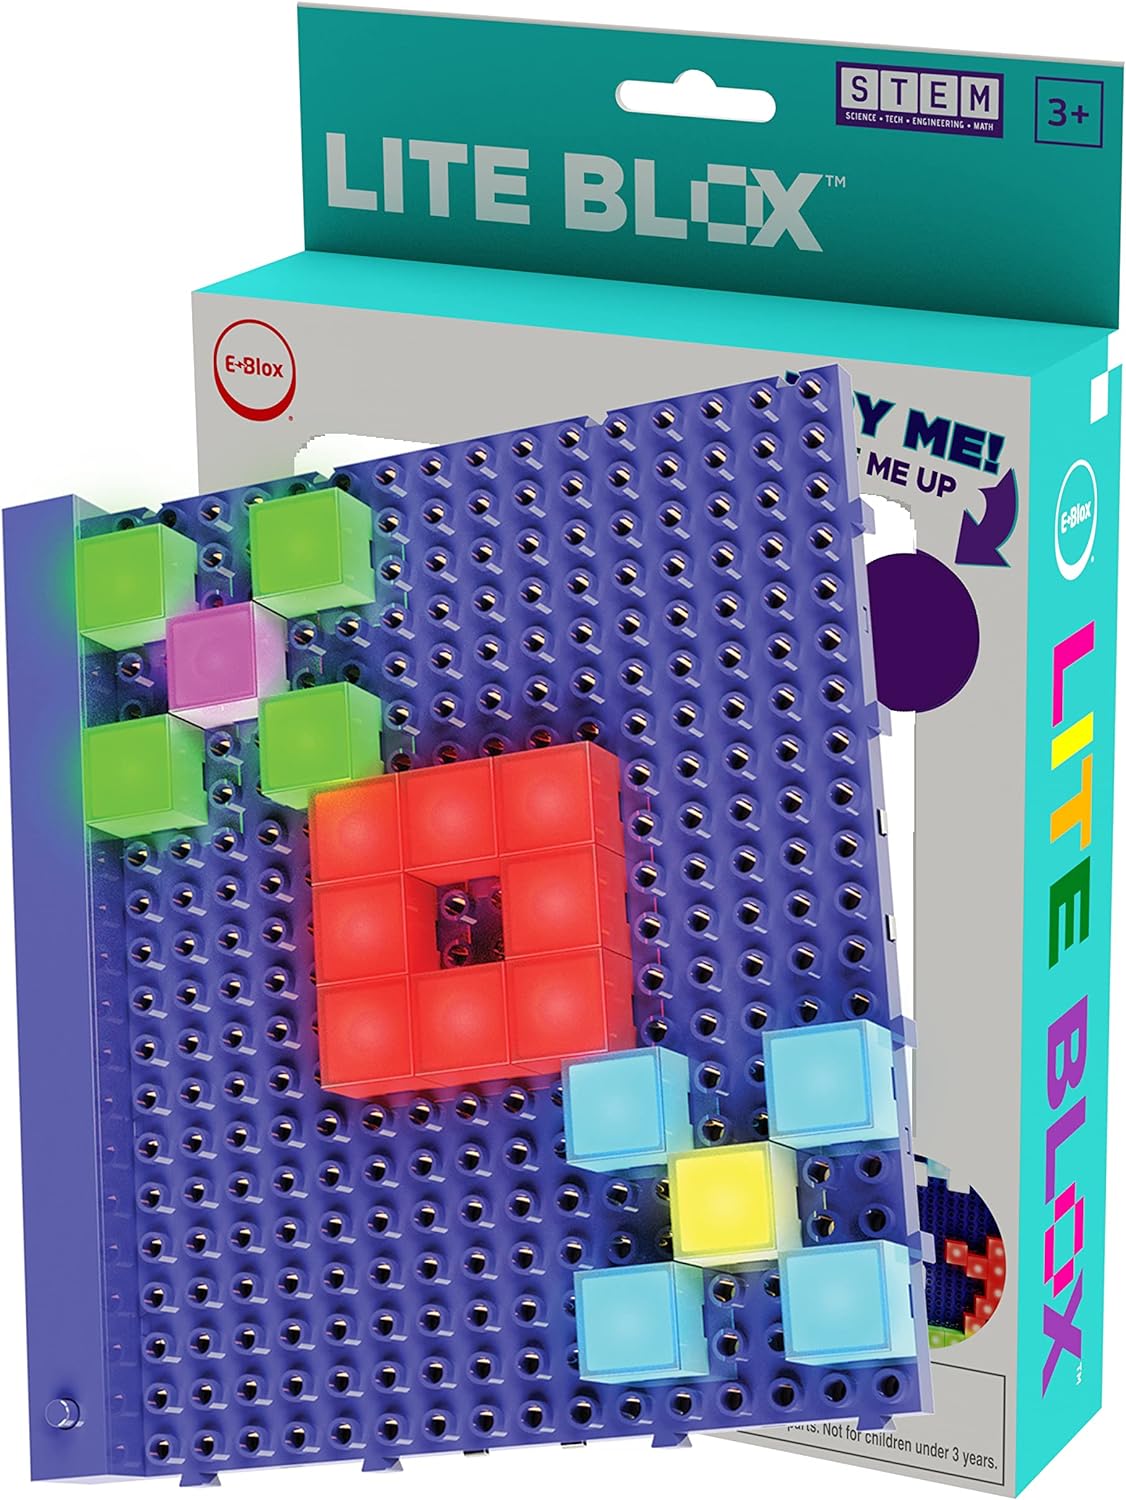 E-Blox Lite Blox STEM Builder Kit